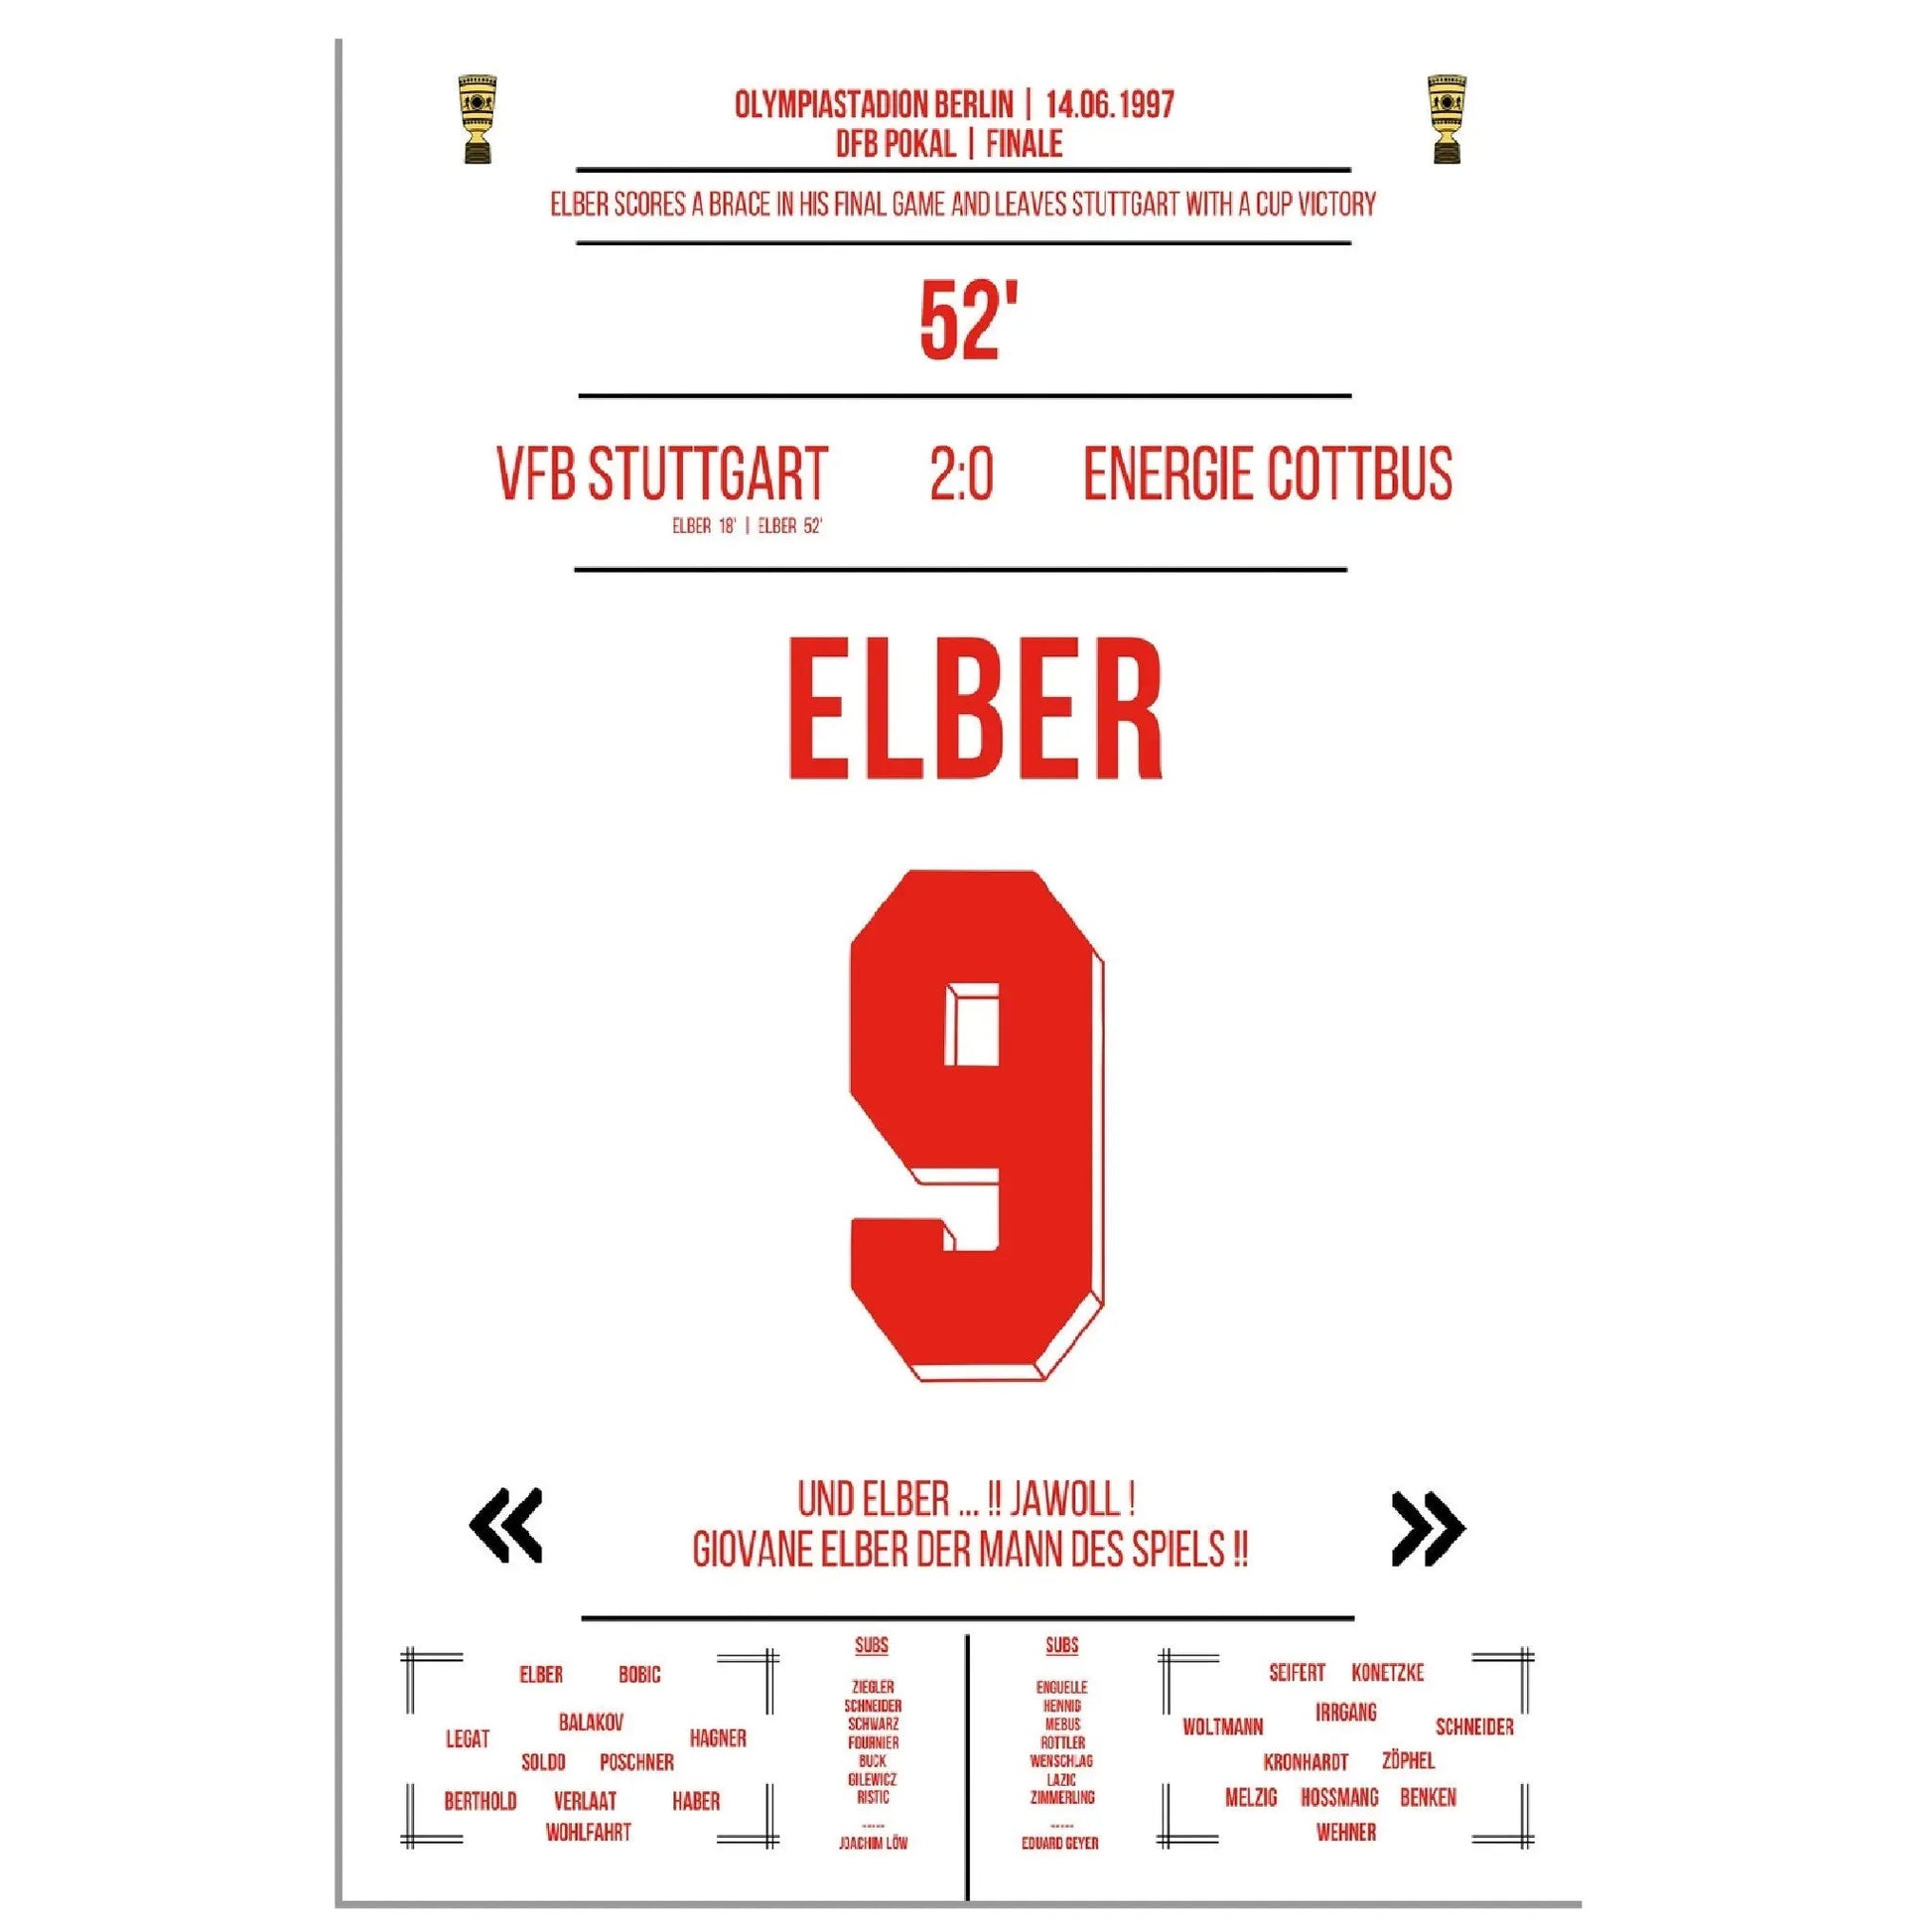 Elber's Doppelpack im DFB Pokalfinale 1997 